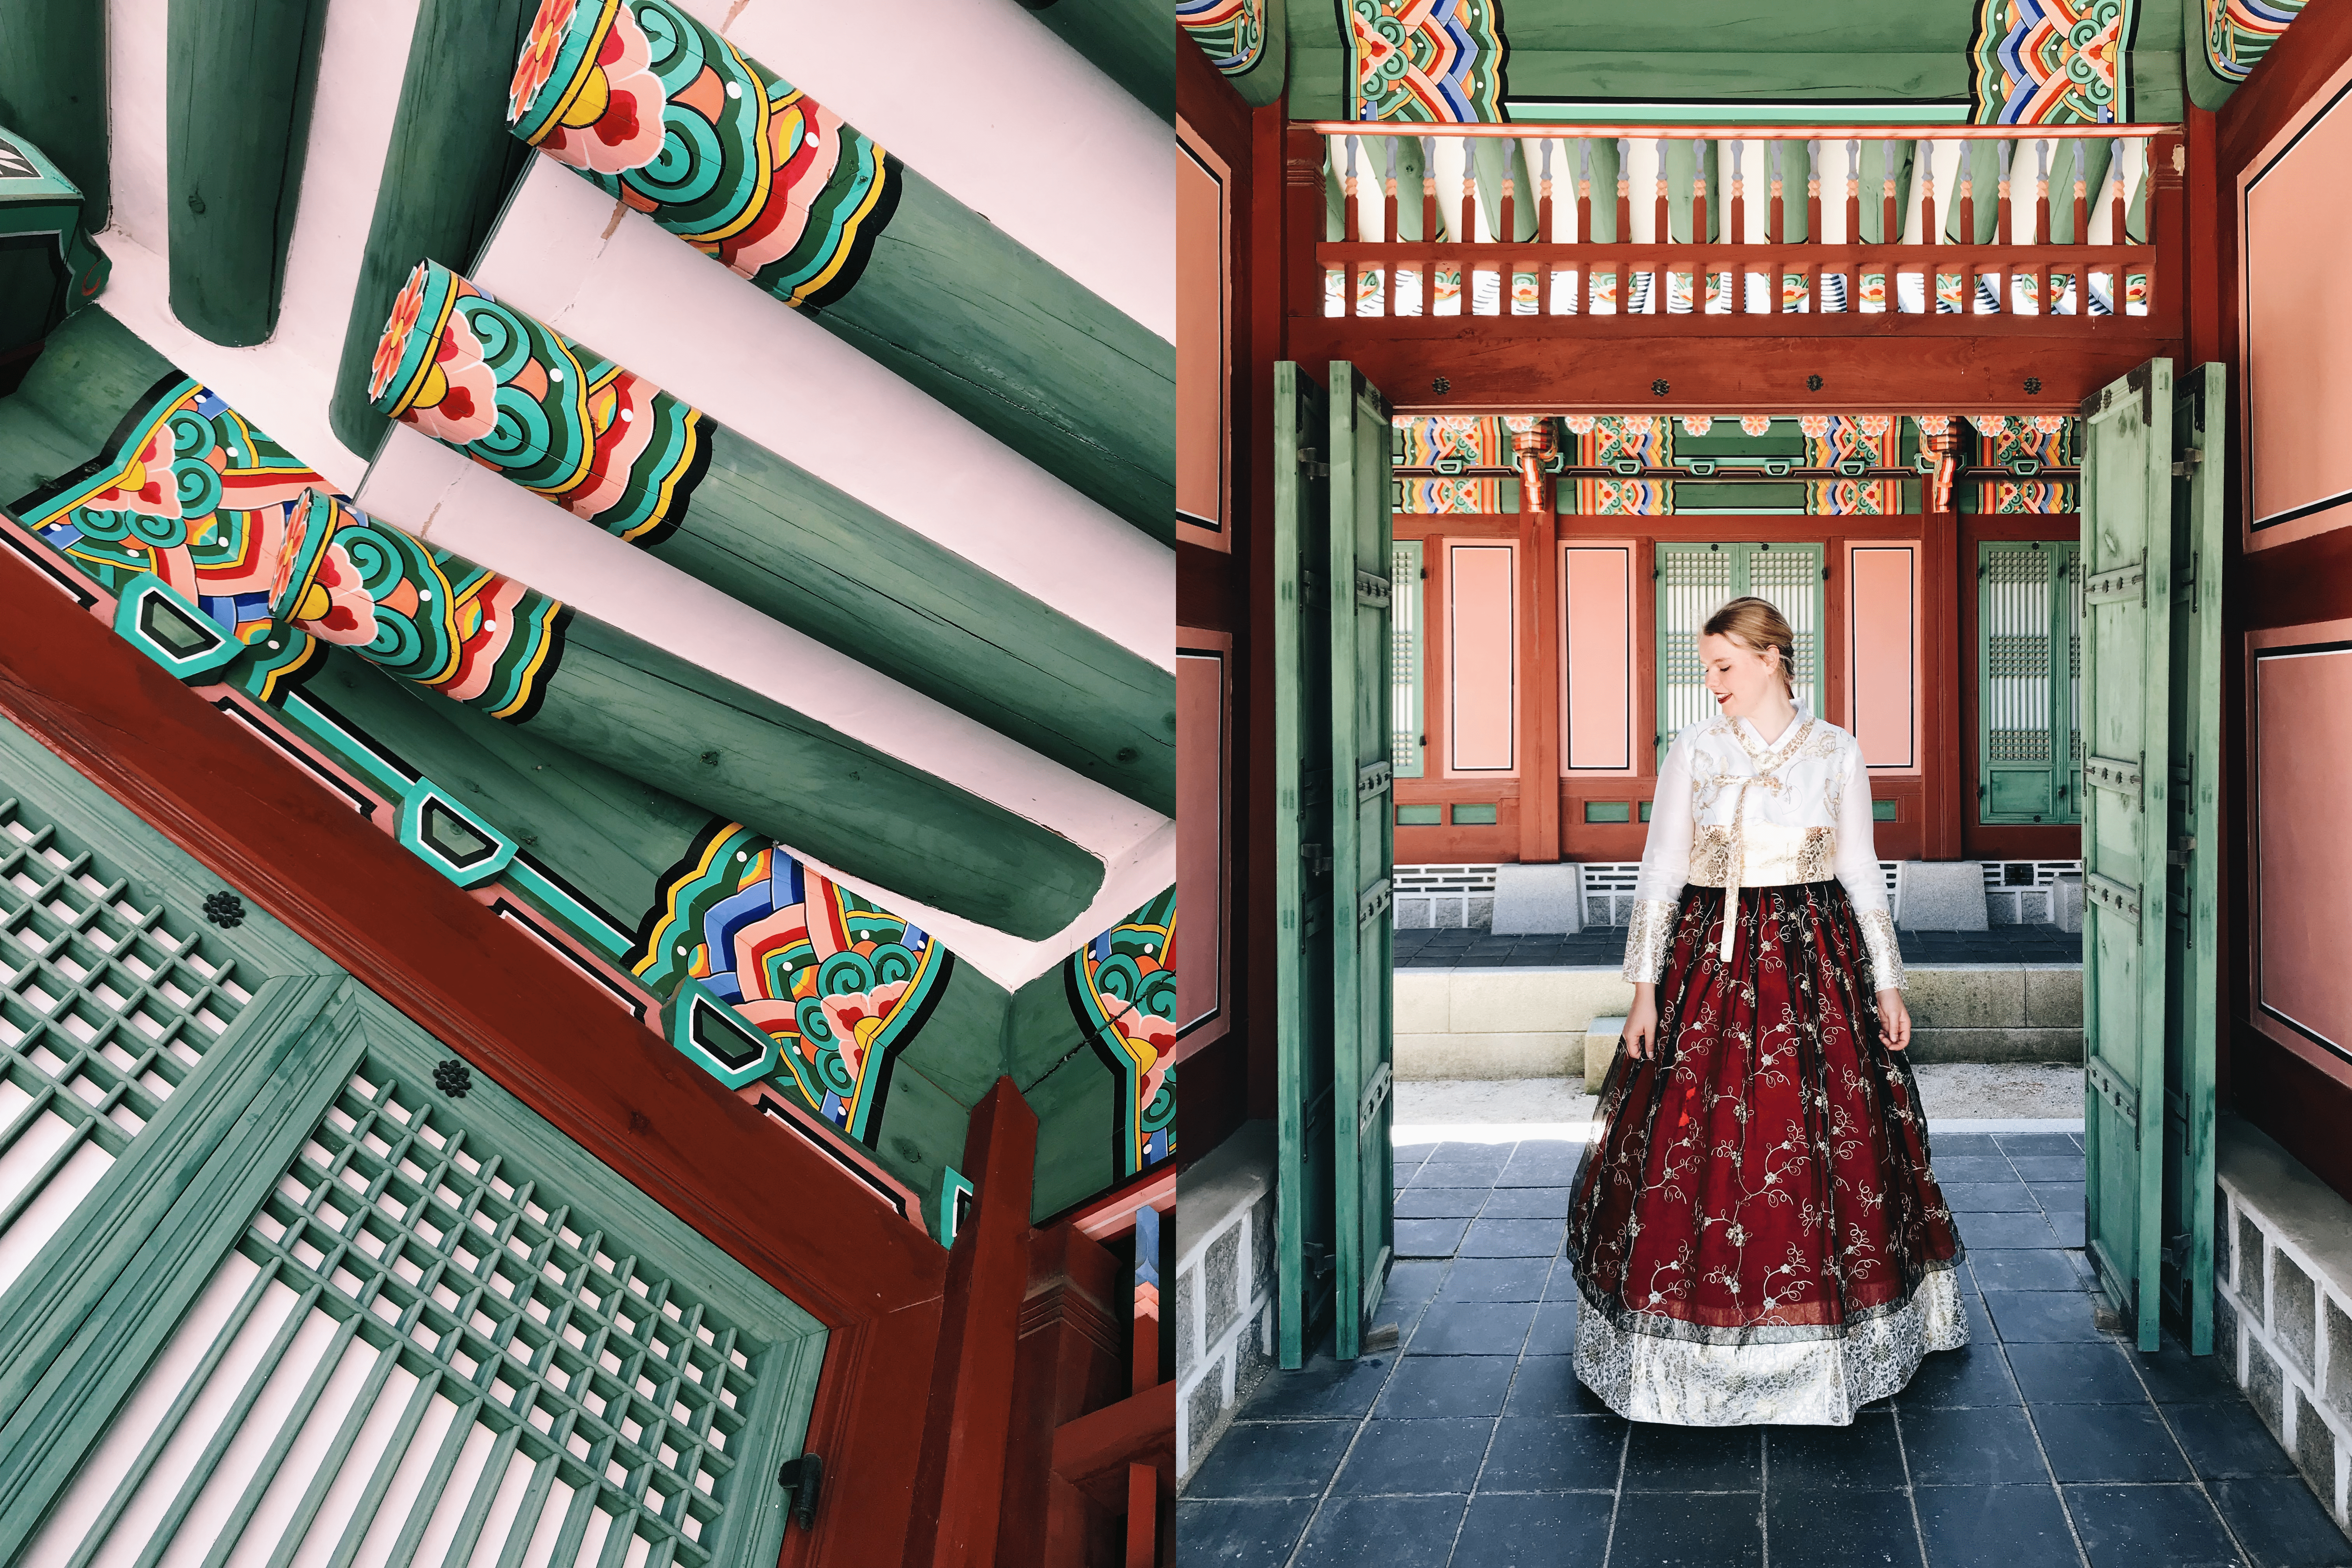 zuid-korea-traditionele-kledij